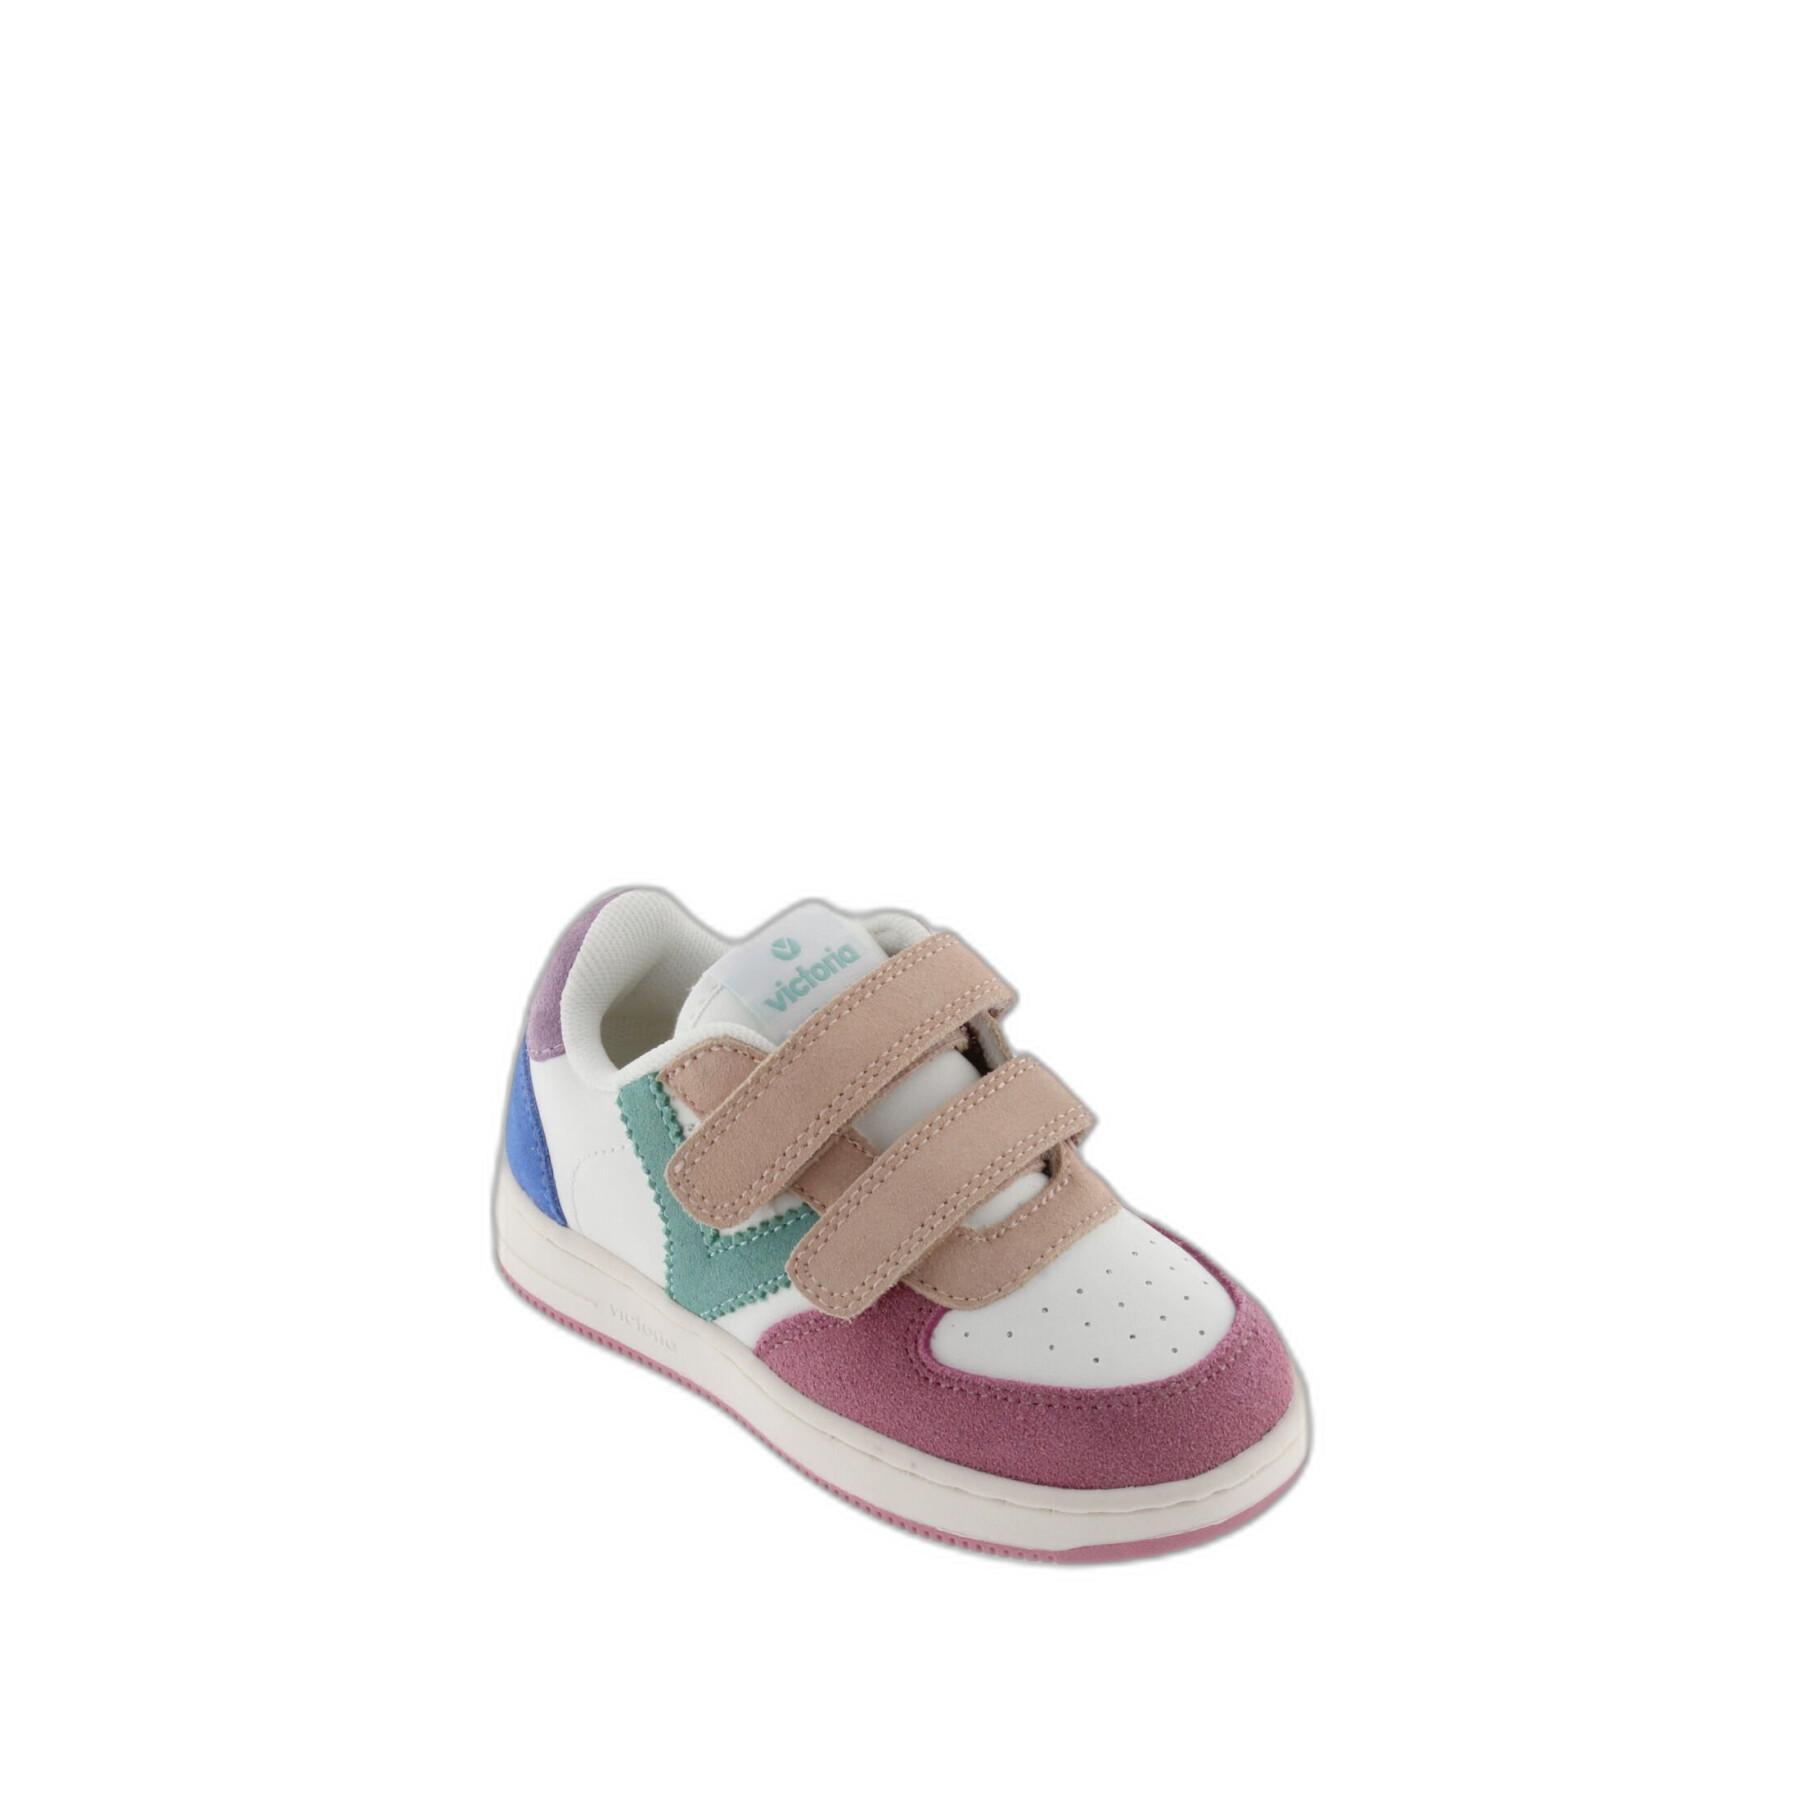 Baby sneakers Victoria 1124116